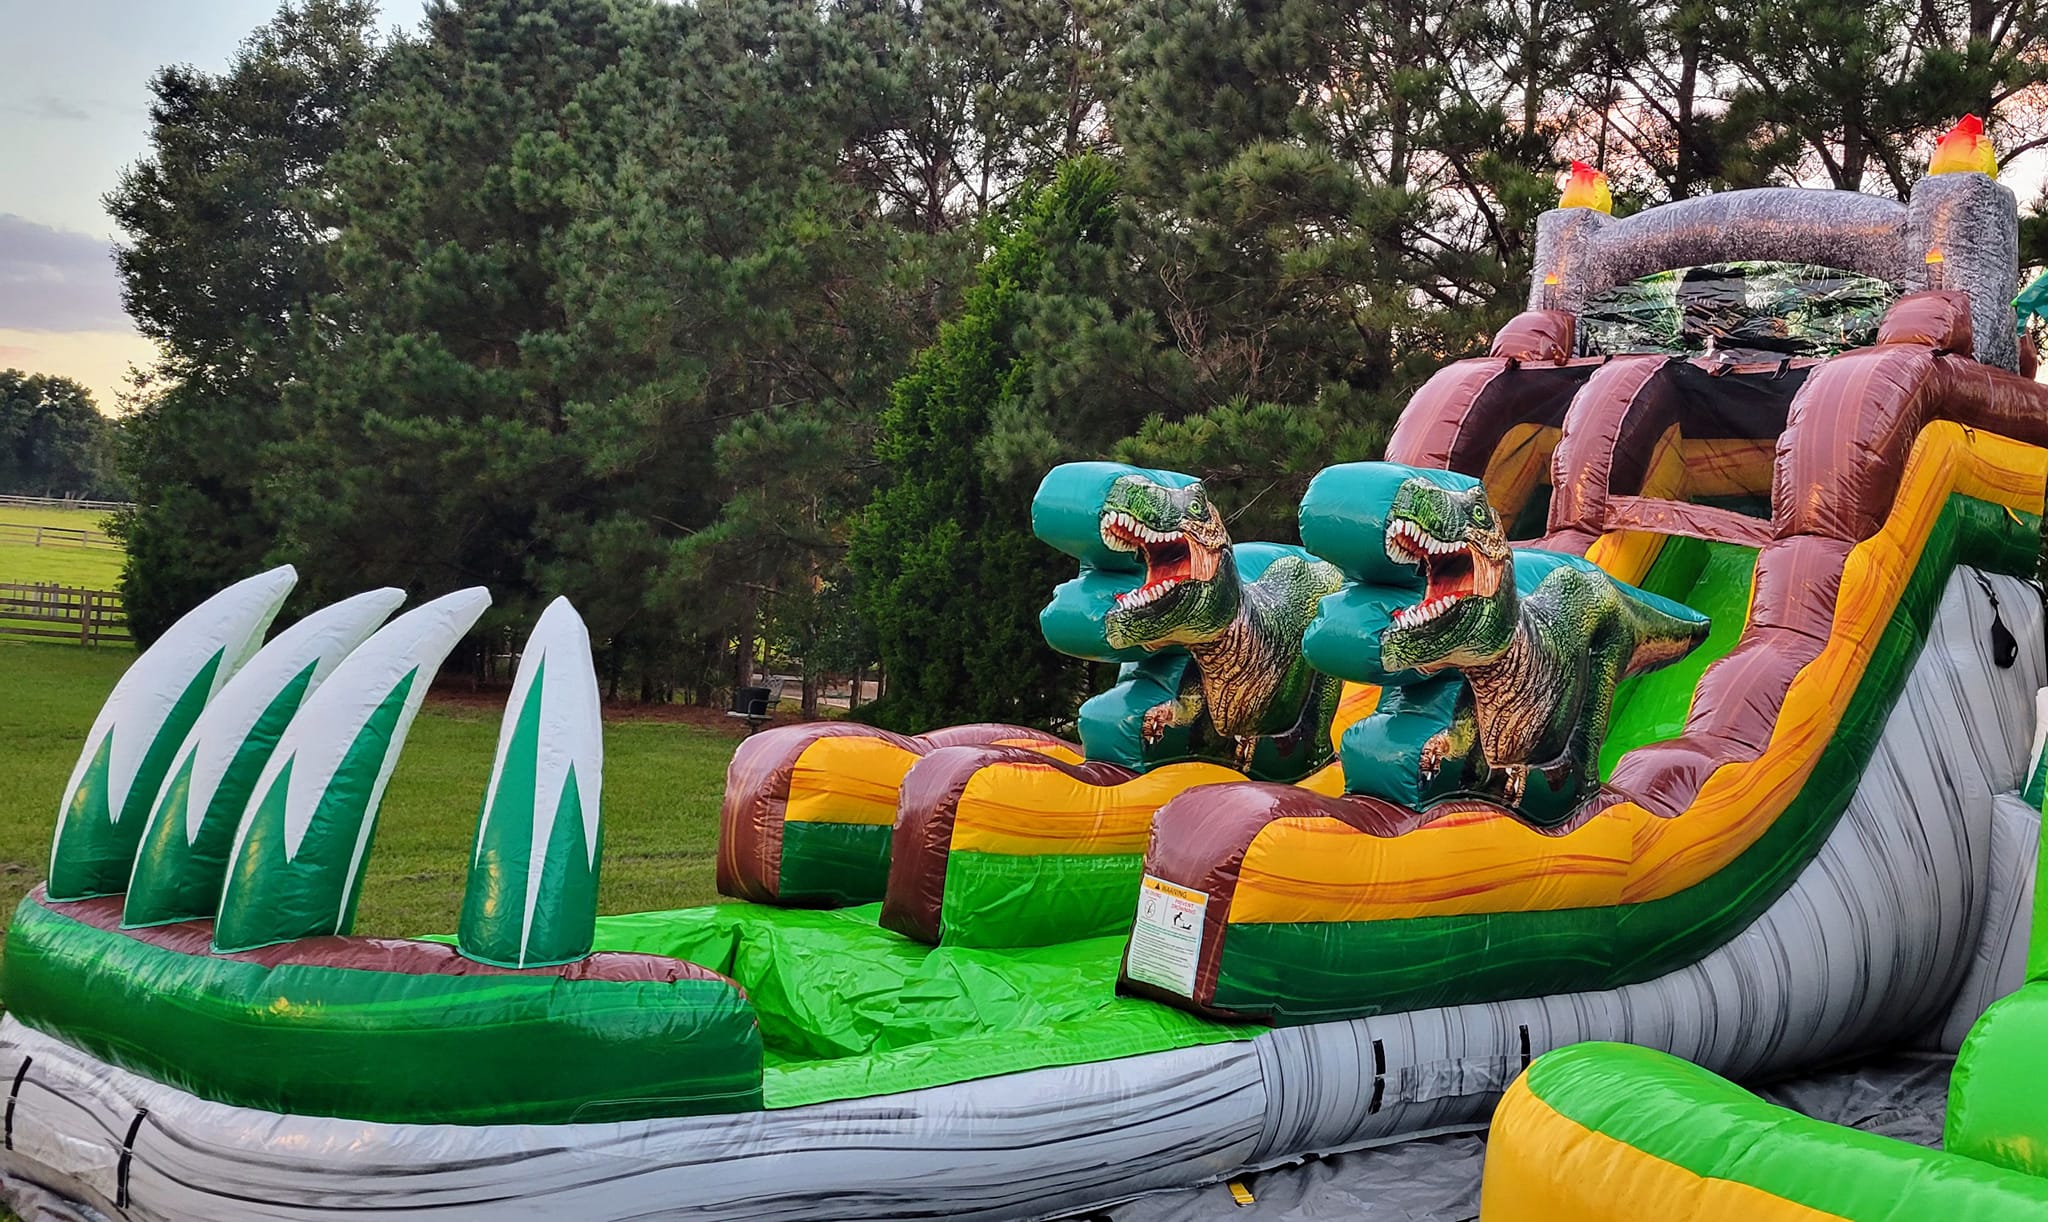 Dino Jump and Slide | Renta Fiesta, Inc.